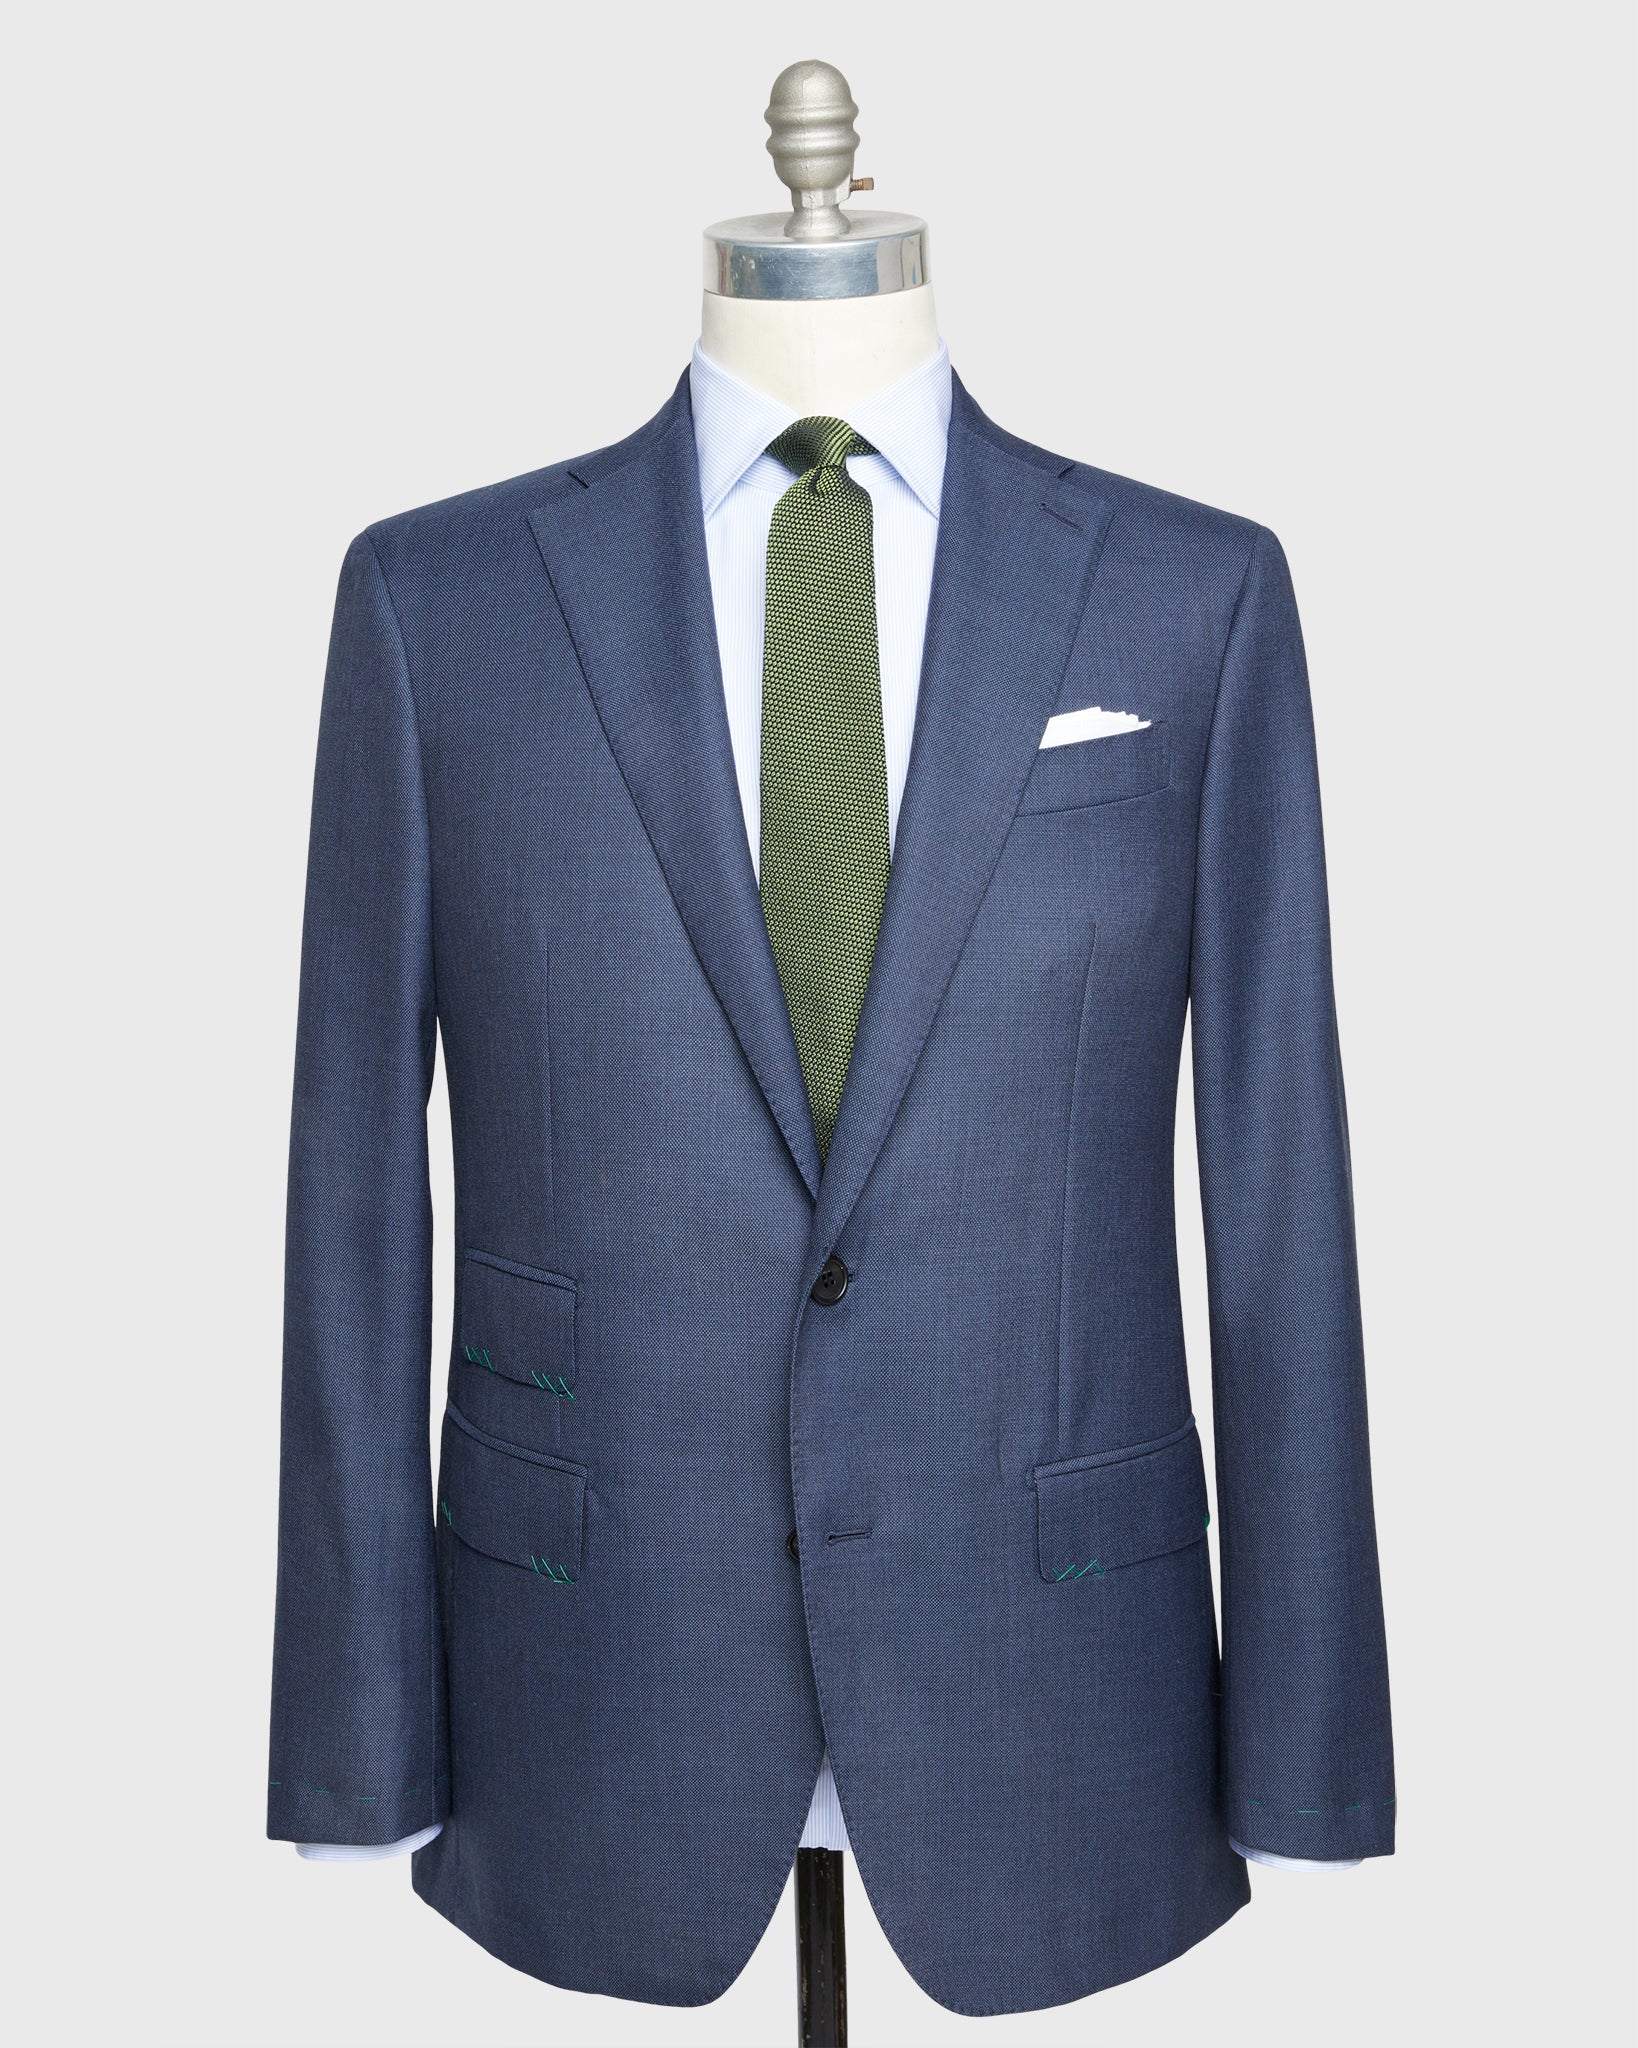 Kincaid No. 3 Suit in Blue Sharkskin